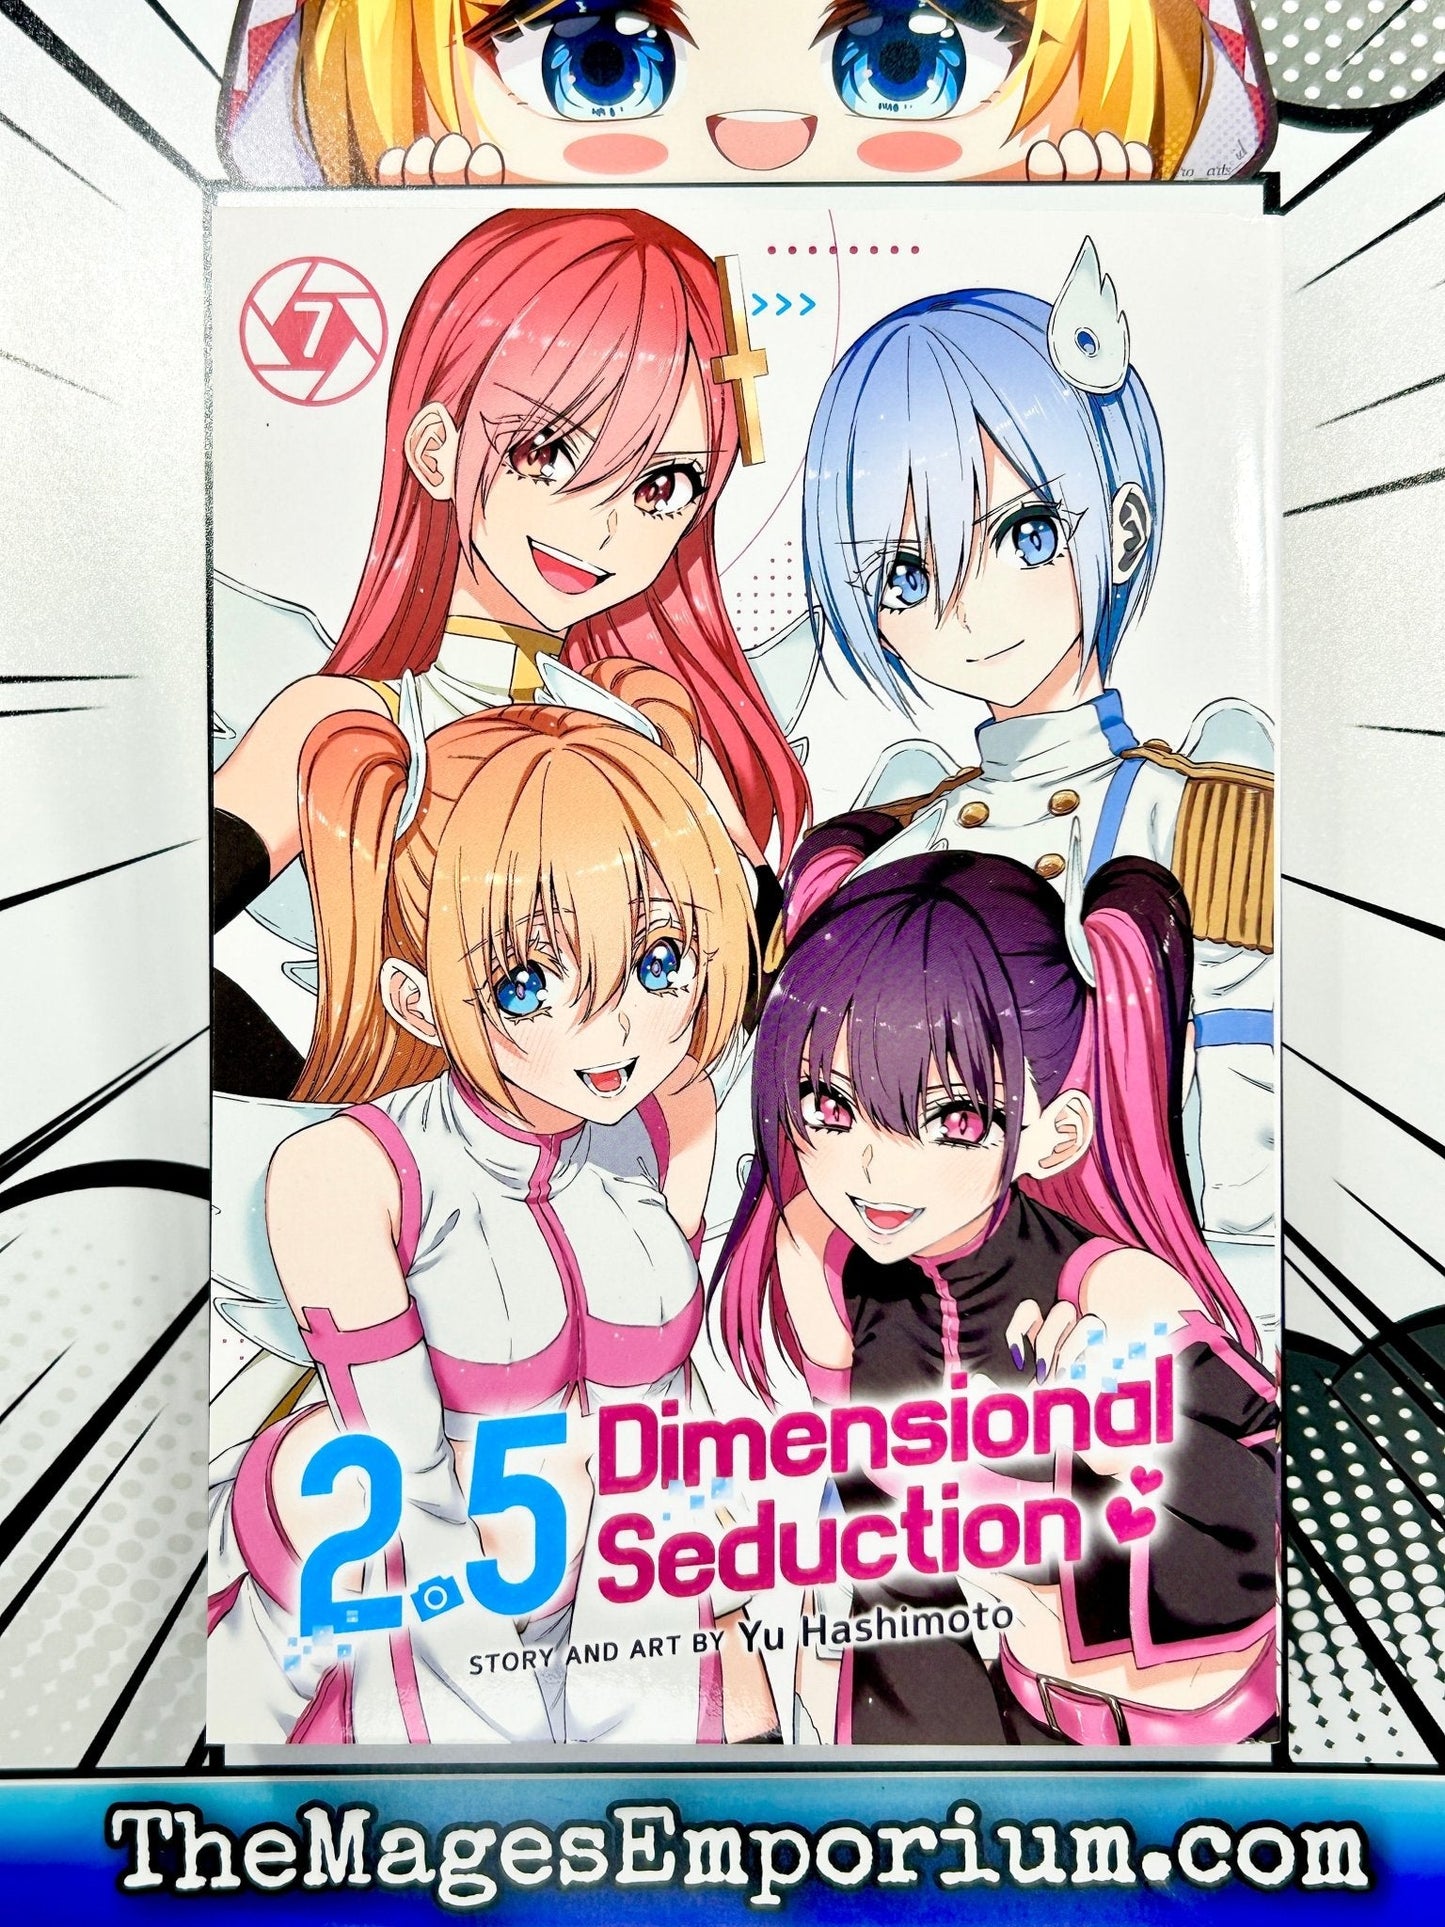 2.5 Dimensional Seduction Vol 7